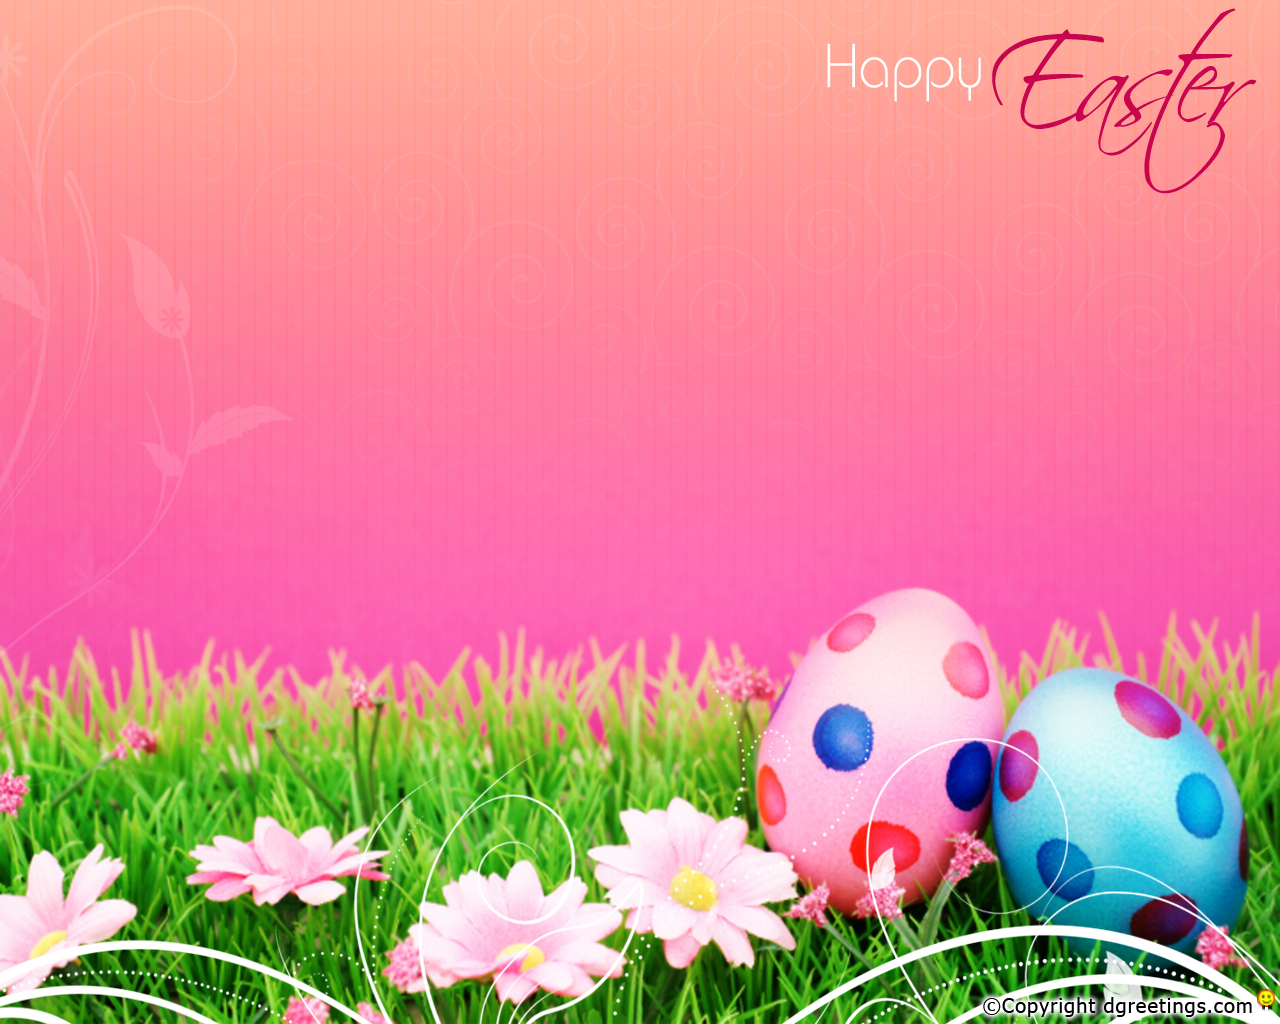 70+] Easter Background Images - WallpaperSafari